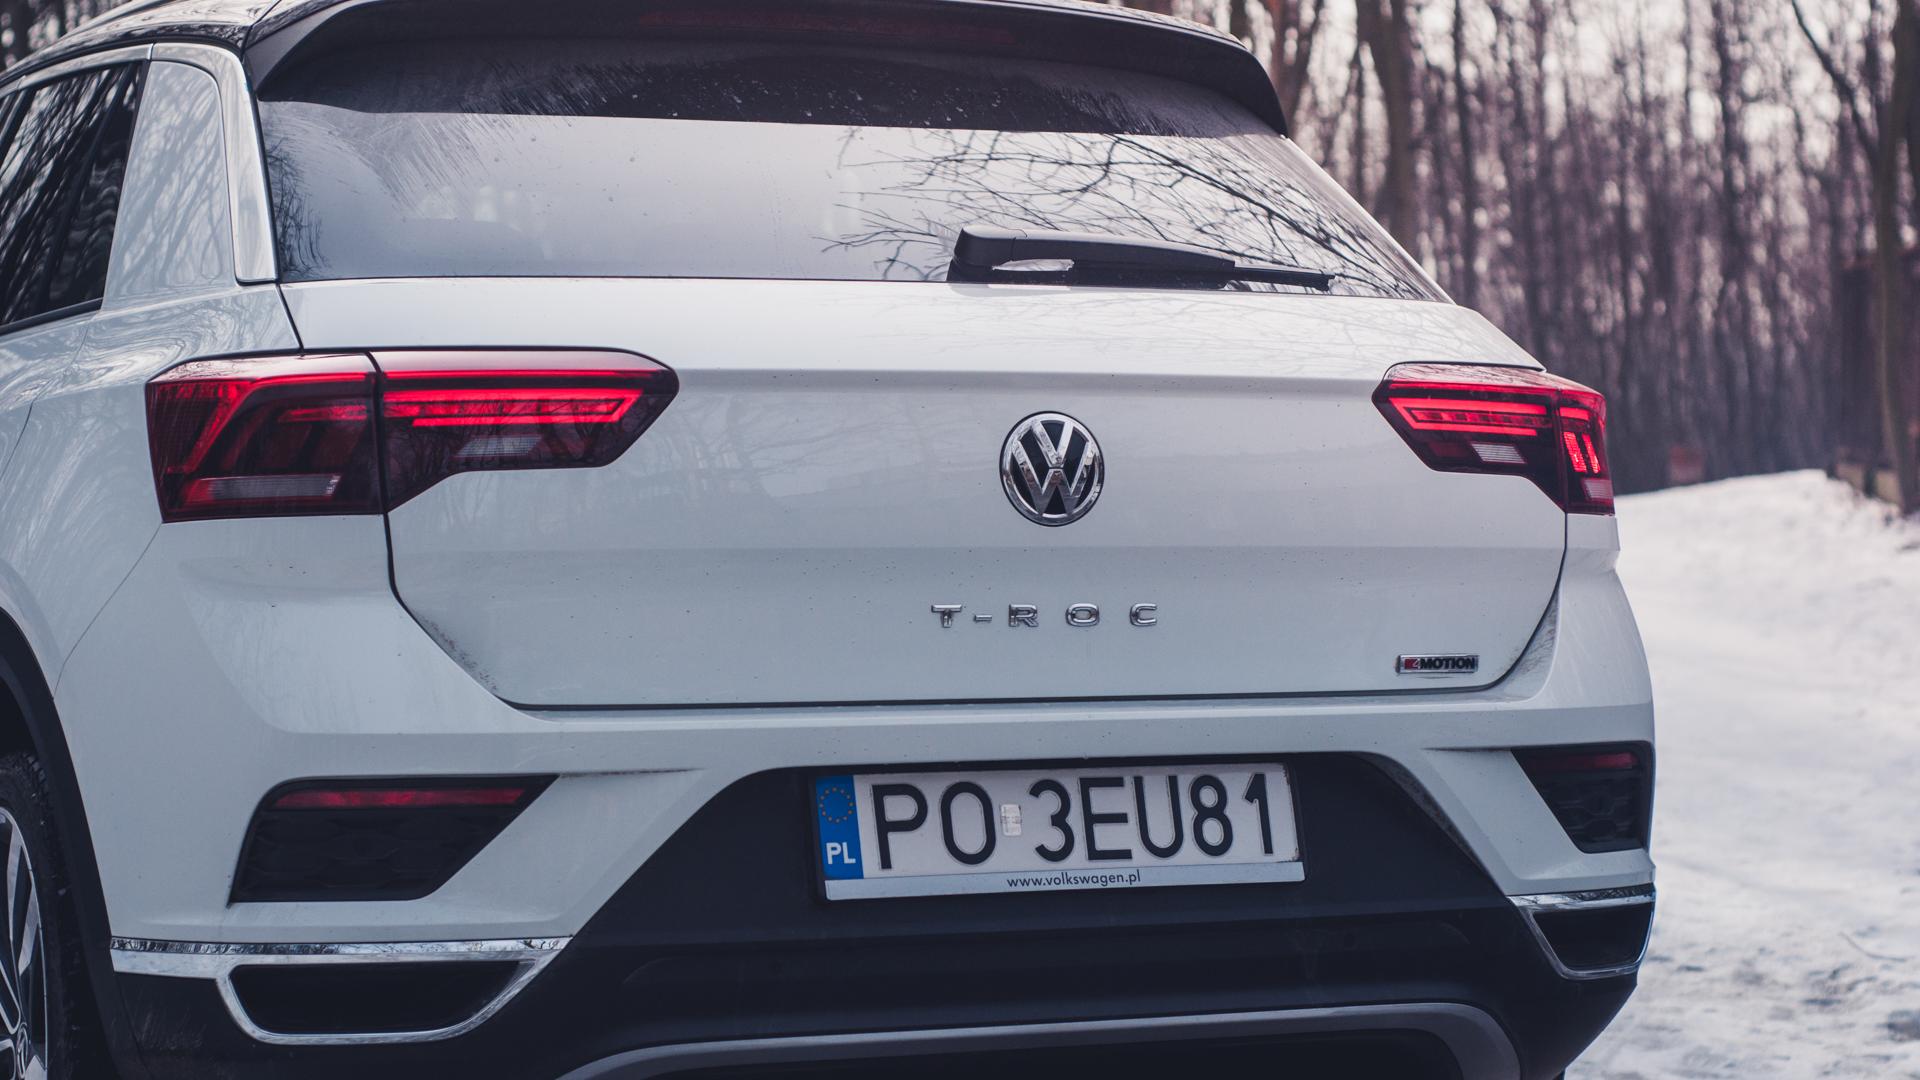 Volkswagen TRoc sport w modnym wydaniu • AutoCentrum.pl